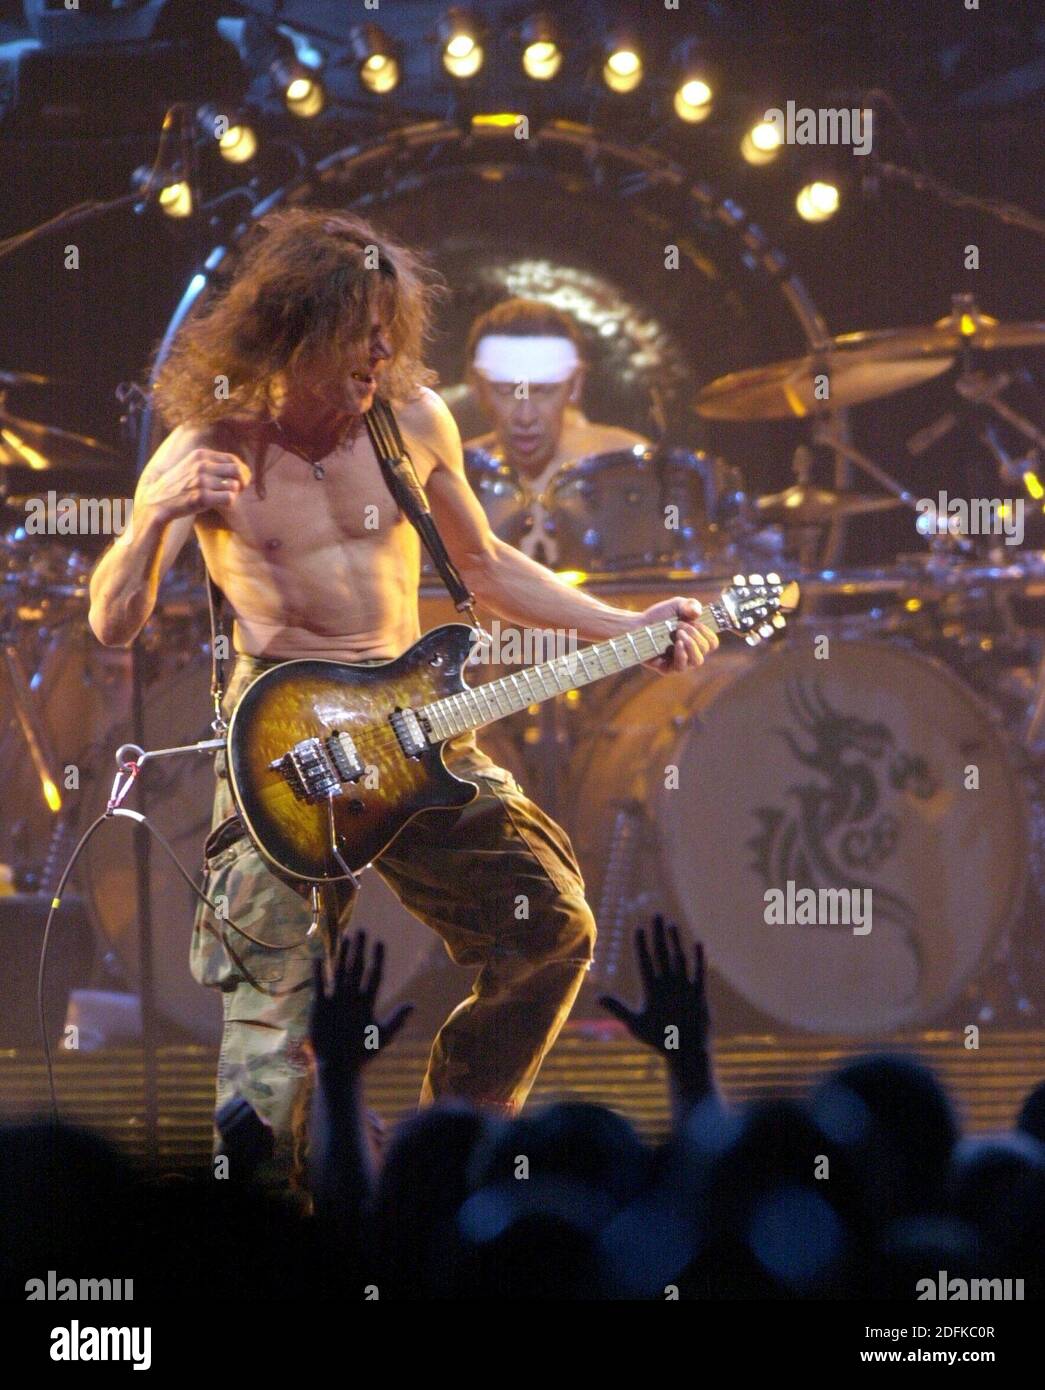 NO FILM, NO VIDEO, NO TV, NO DOCUMENTARY - File photo dated August 10, 2004  of Eddie Van Halen performs during Van Halen's concert at the HP Pavilion  in San Jose, CA,